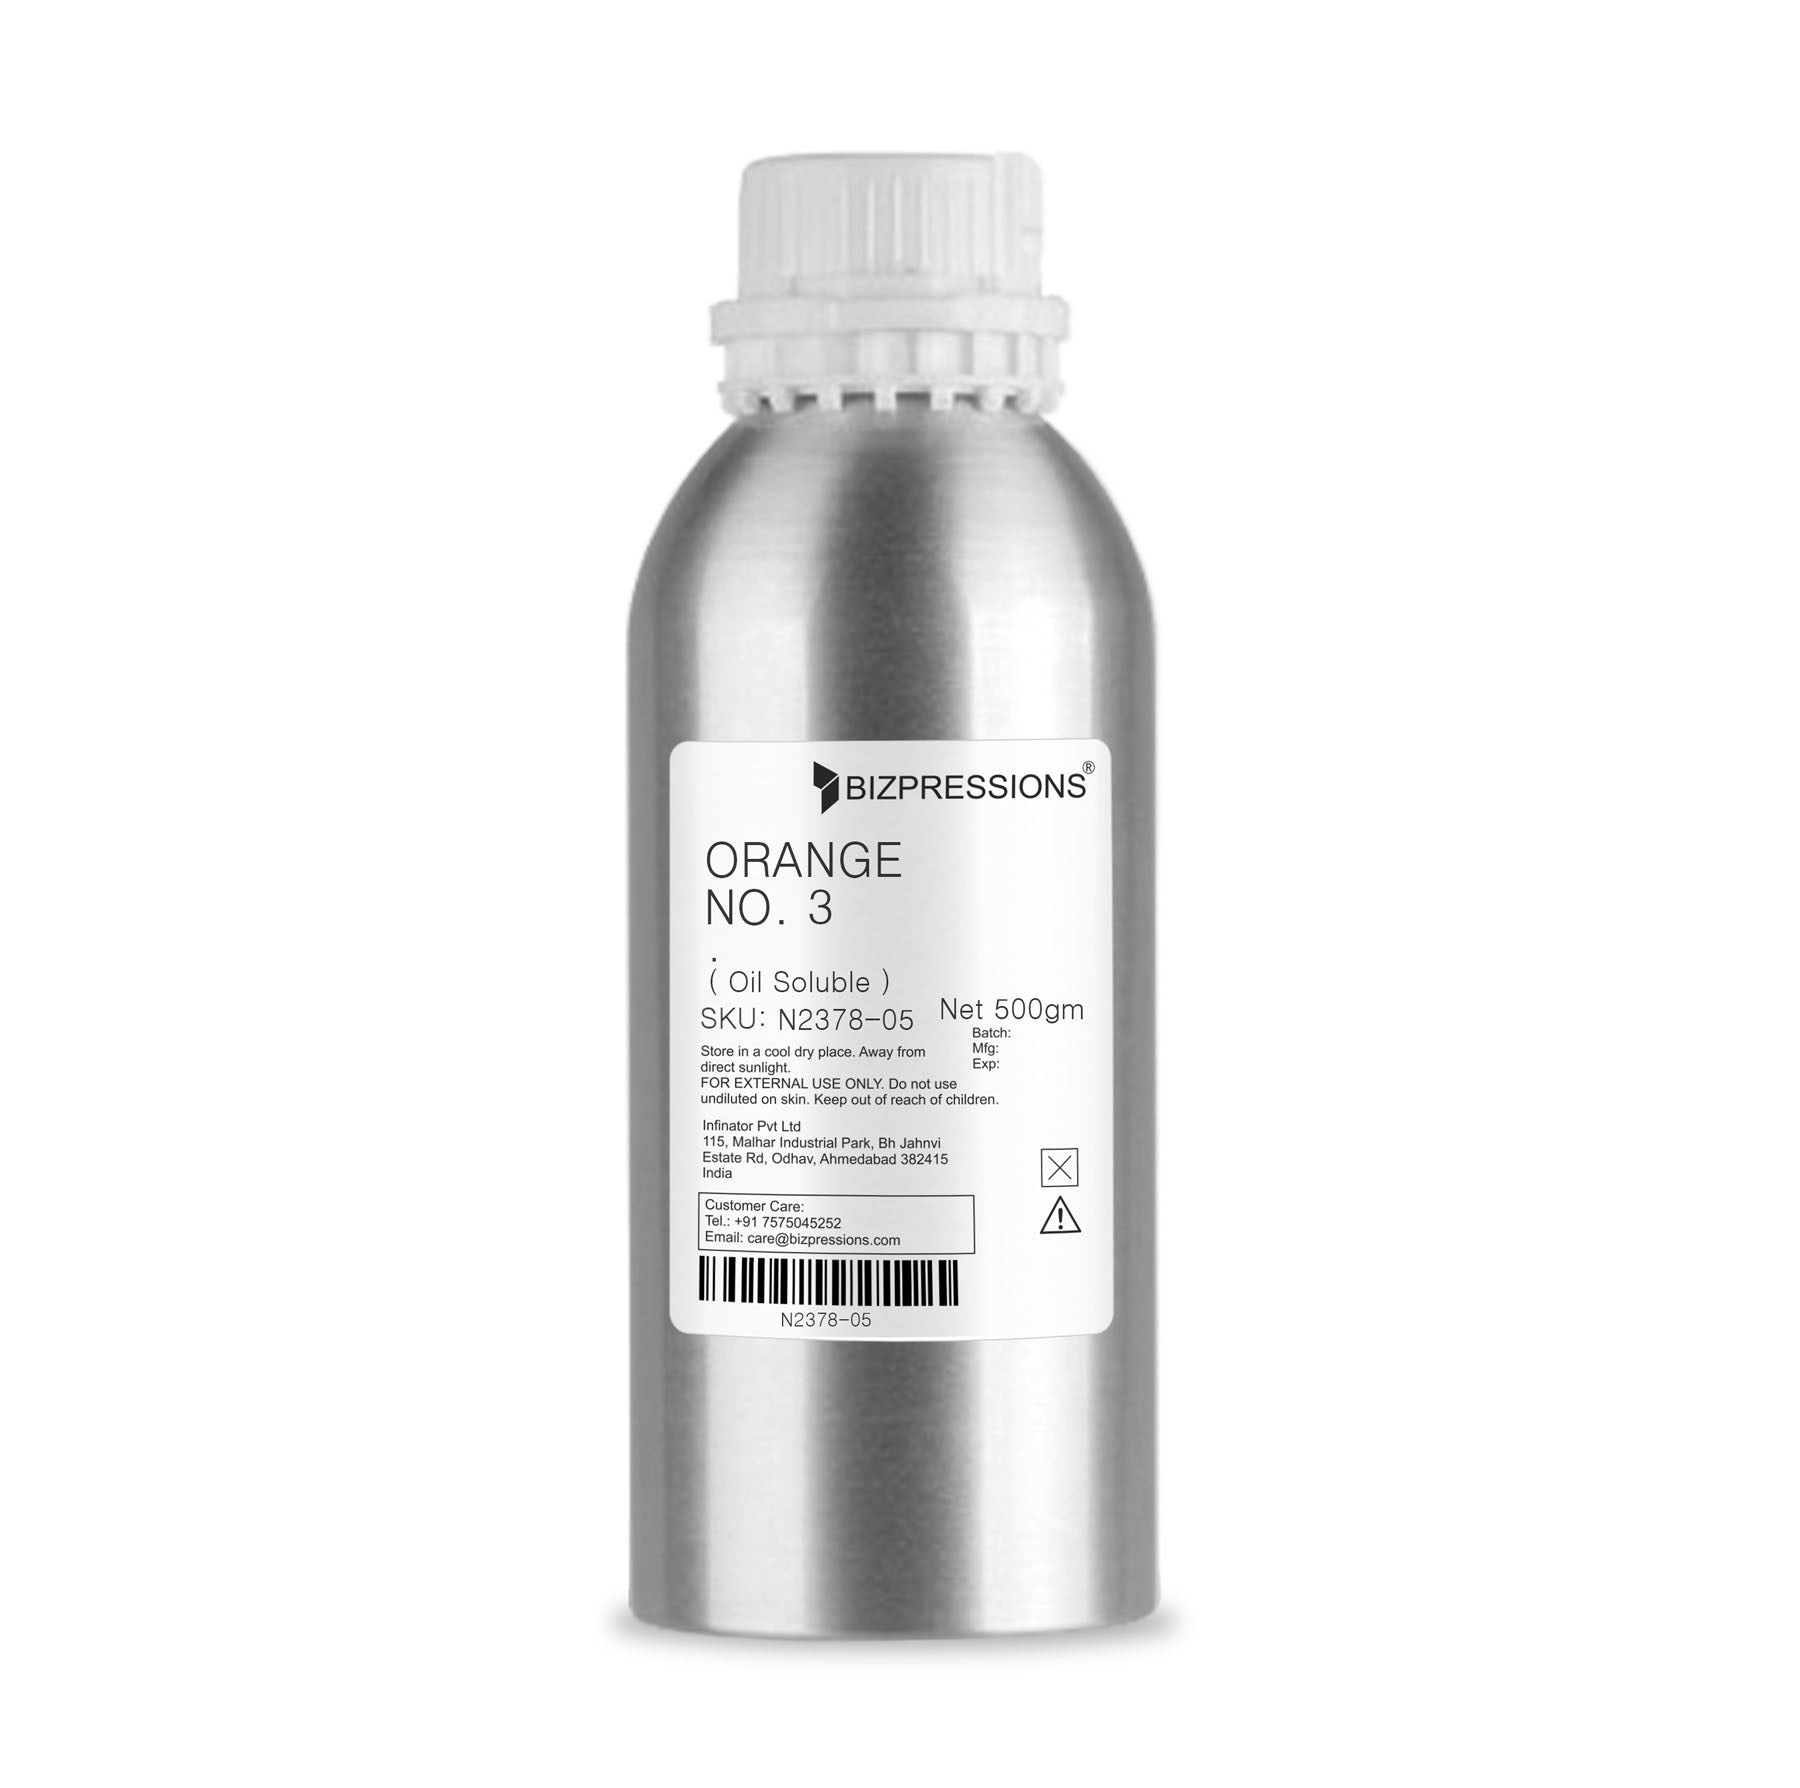 ORANGE NO. 3 - Fragrance ( Oil Soluble ) - 500 gm